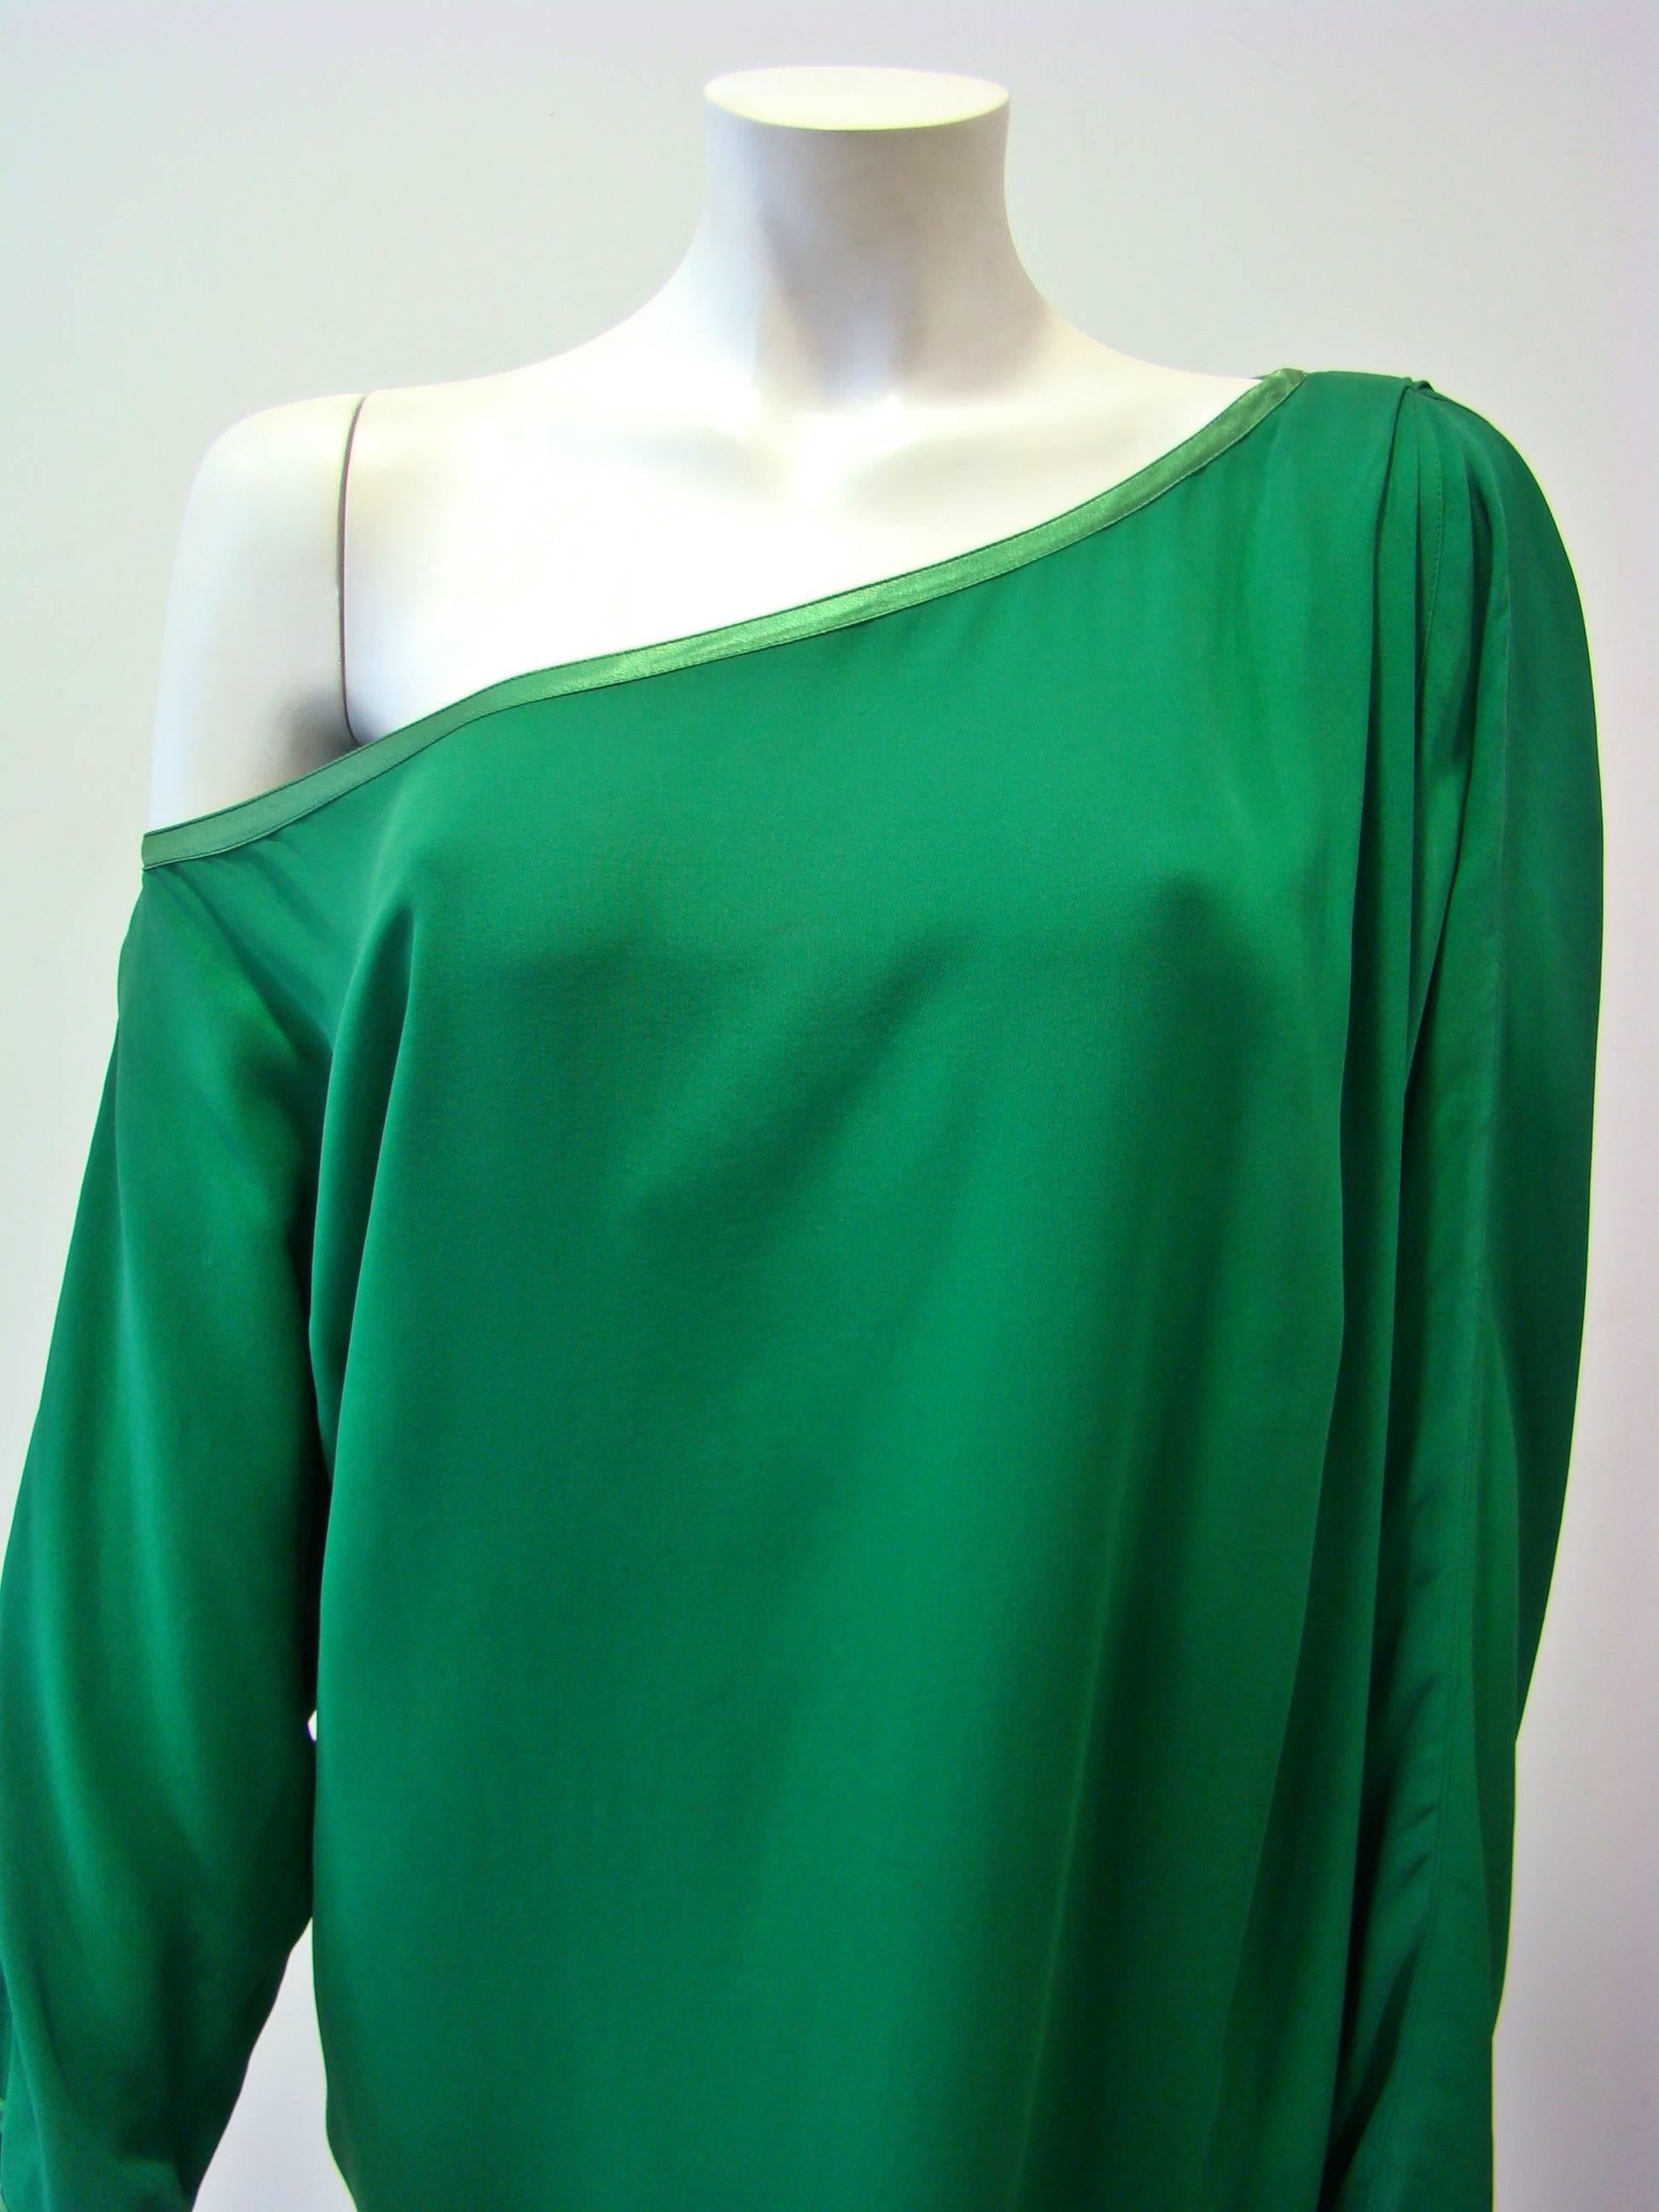 Green Early Gianni Versace Silk Kaftan Dress 1983